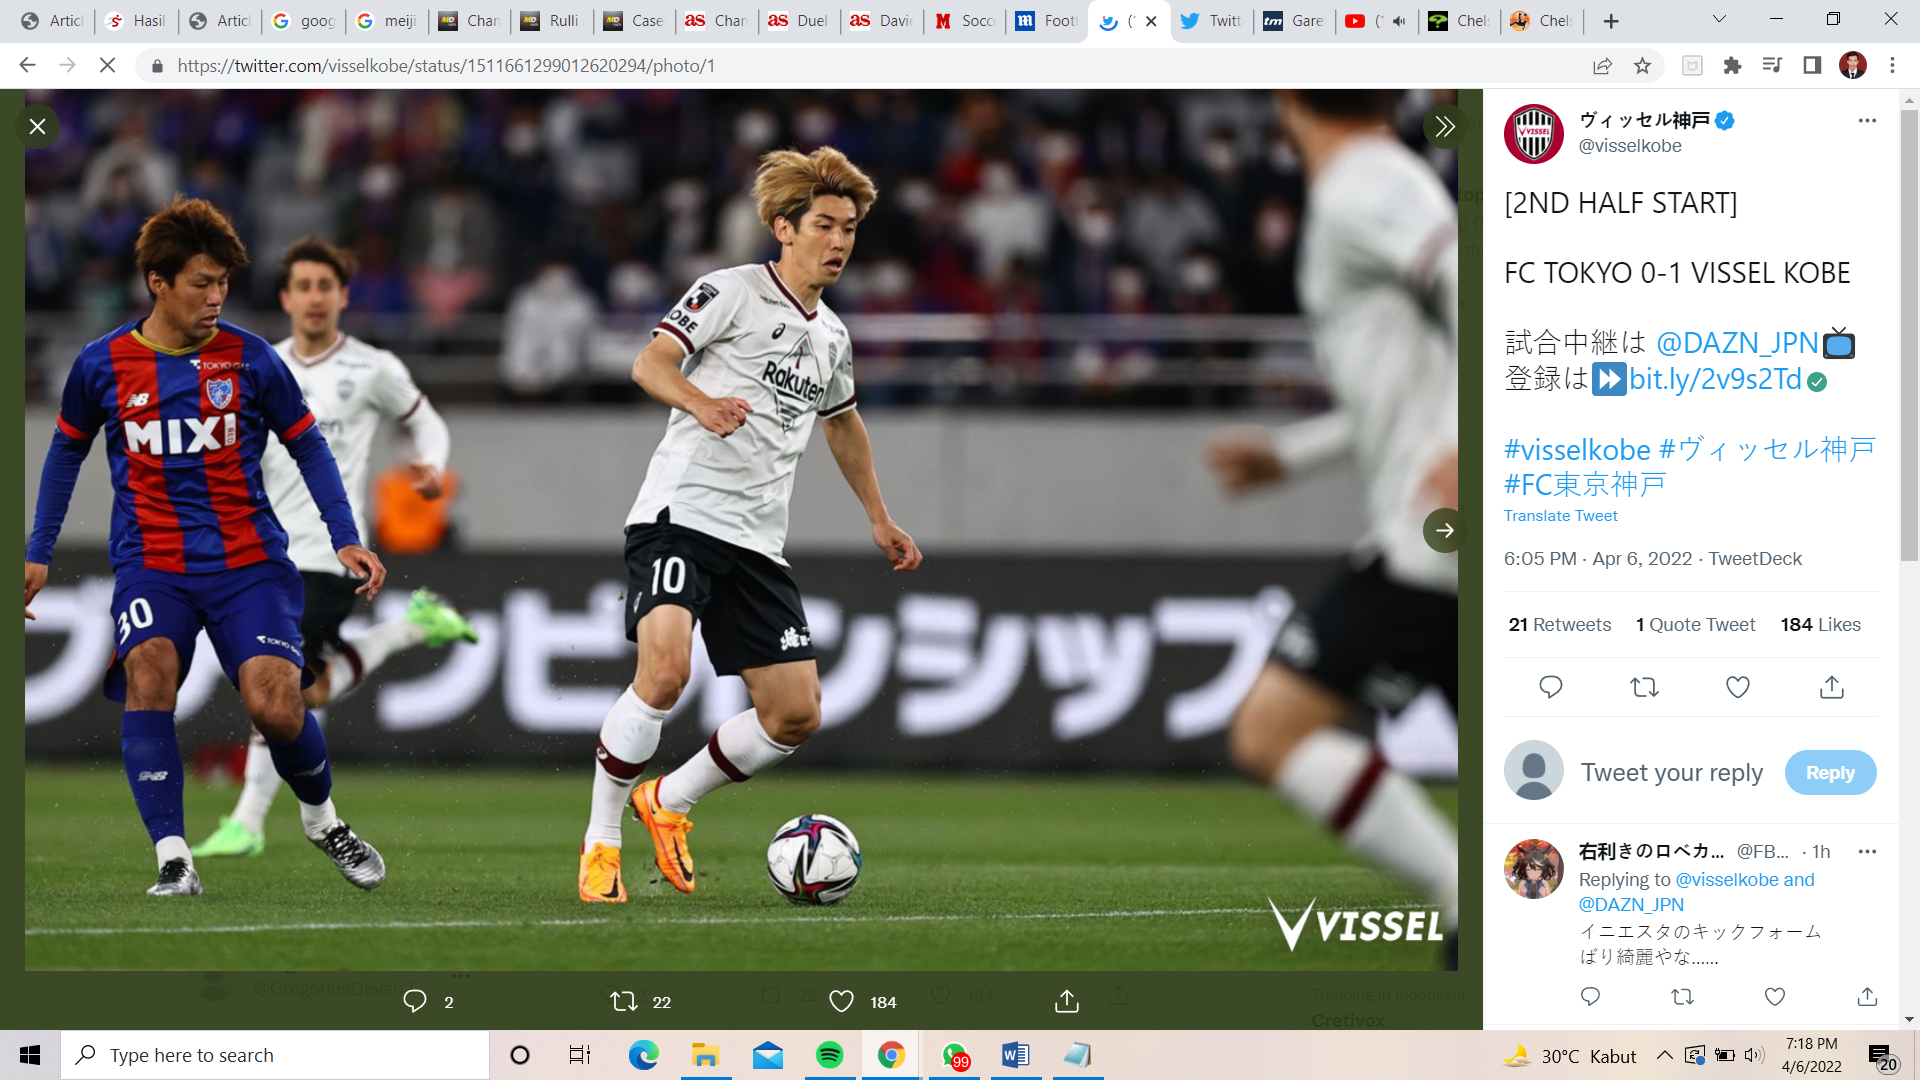 Hasil Meiji Yasuda J1 League 2022: Vissel Kobe Kembali Kalah, Kashima Antlers ke Puncak